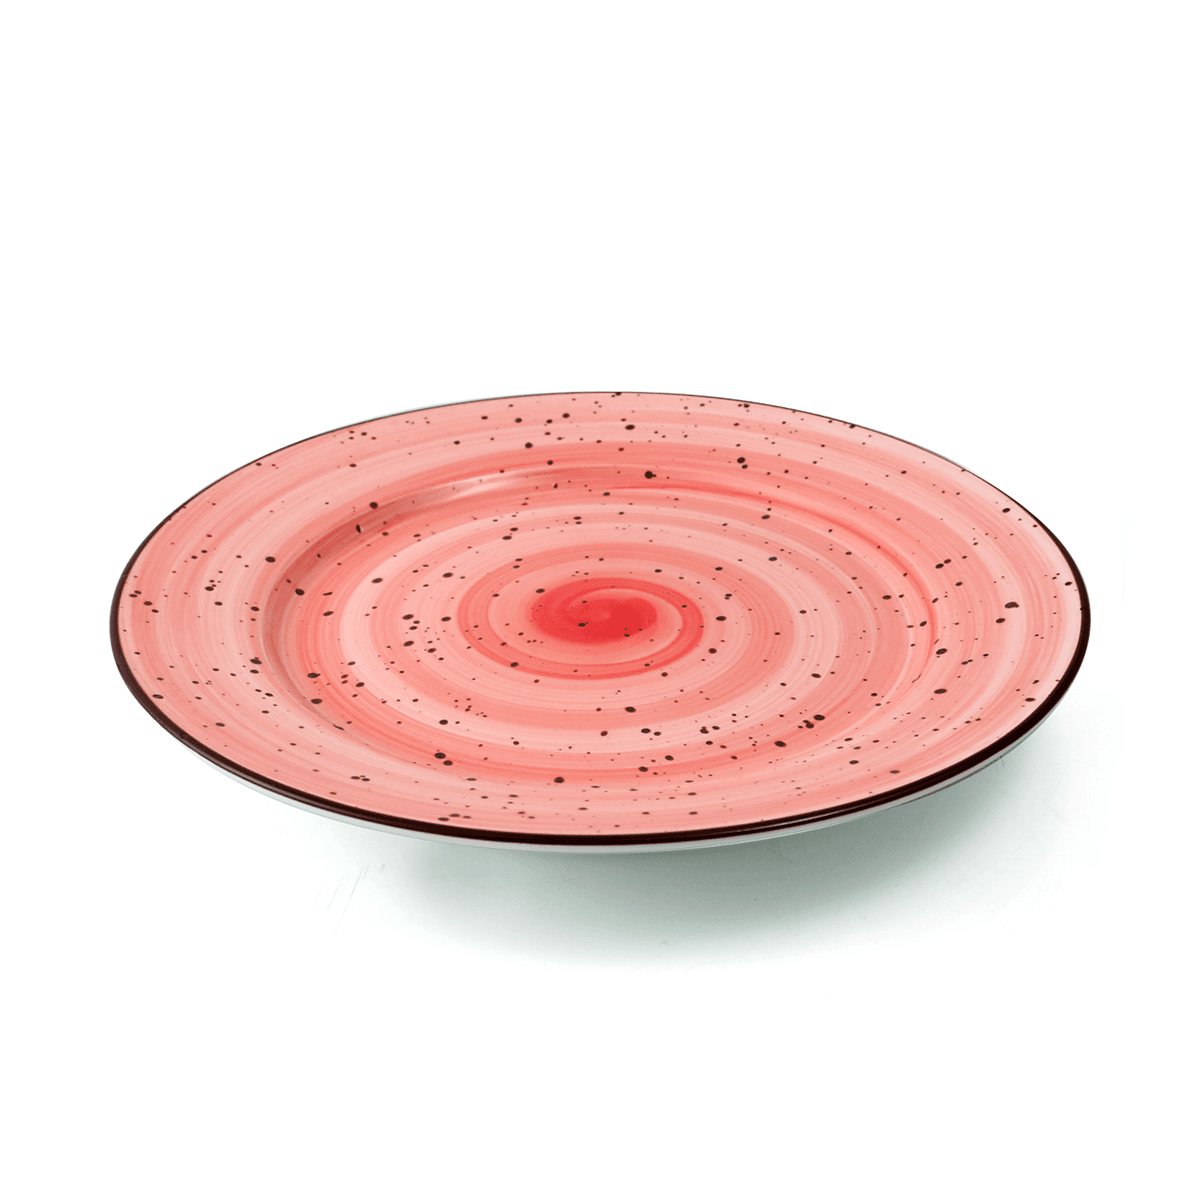 صحن تقديم مسطح بورسلان 8 بوصة أحمر بورسليتا Porceletta Glazed Porcelain Flat Plate